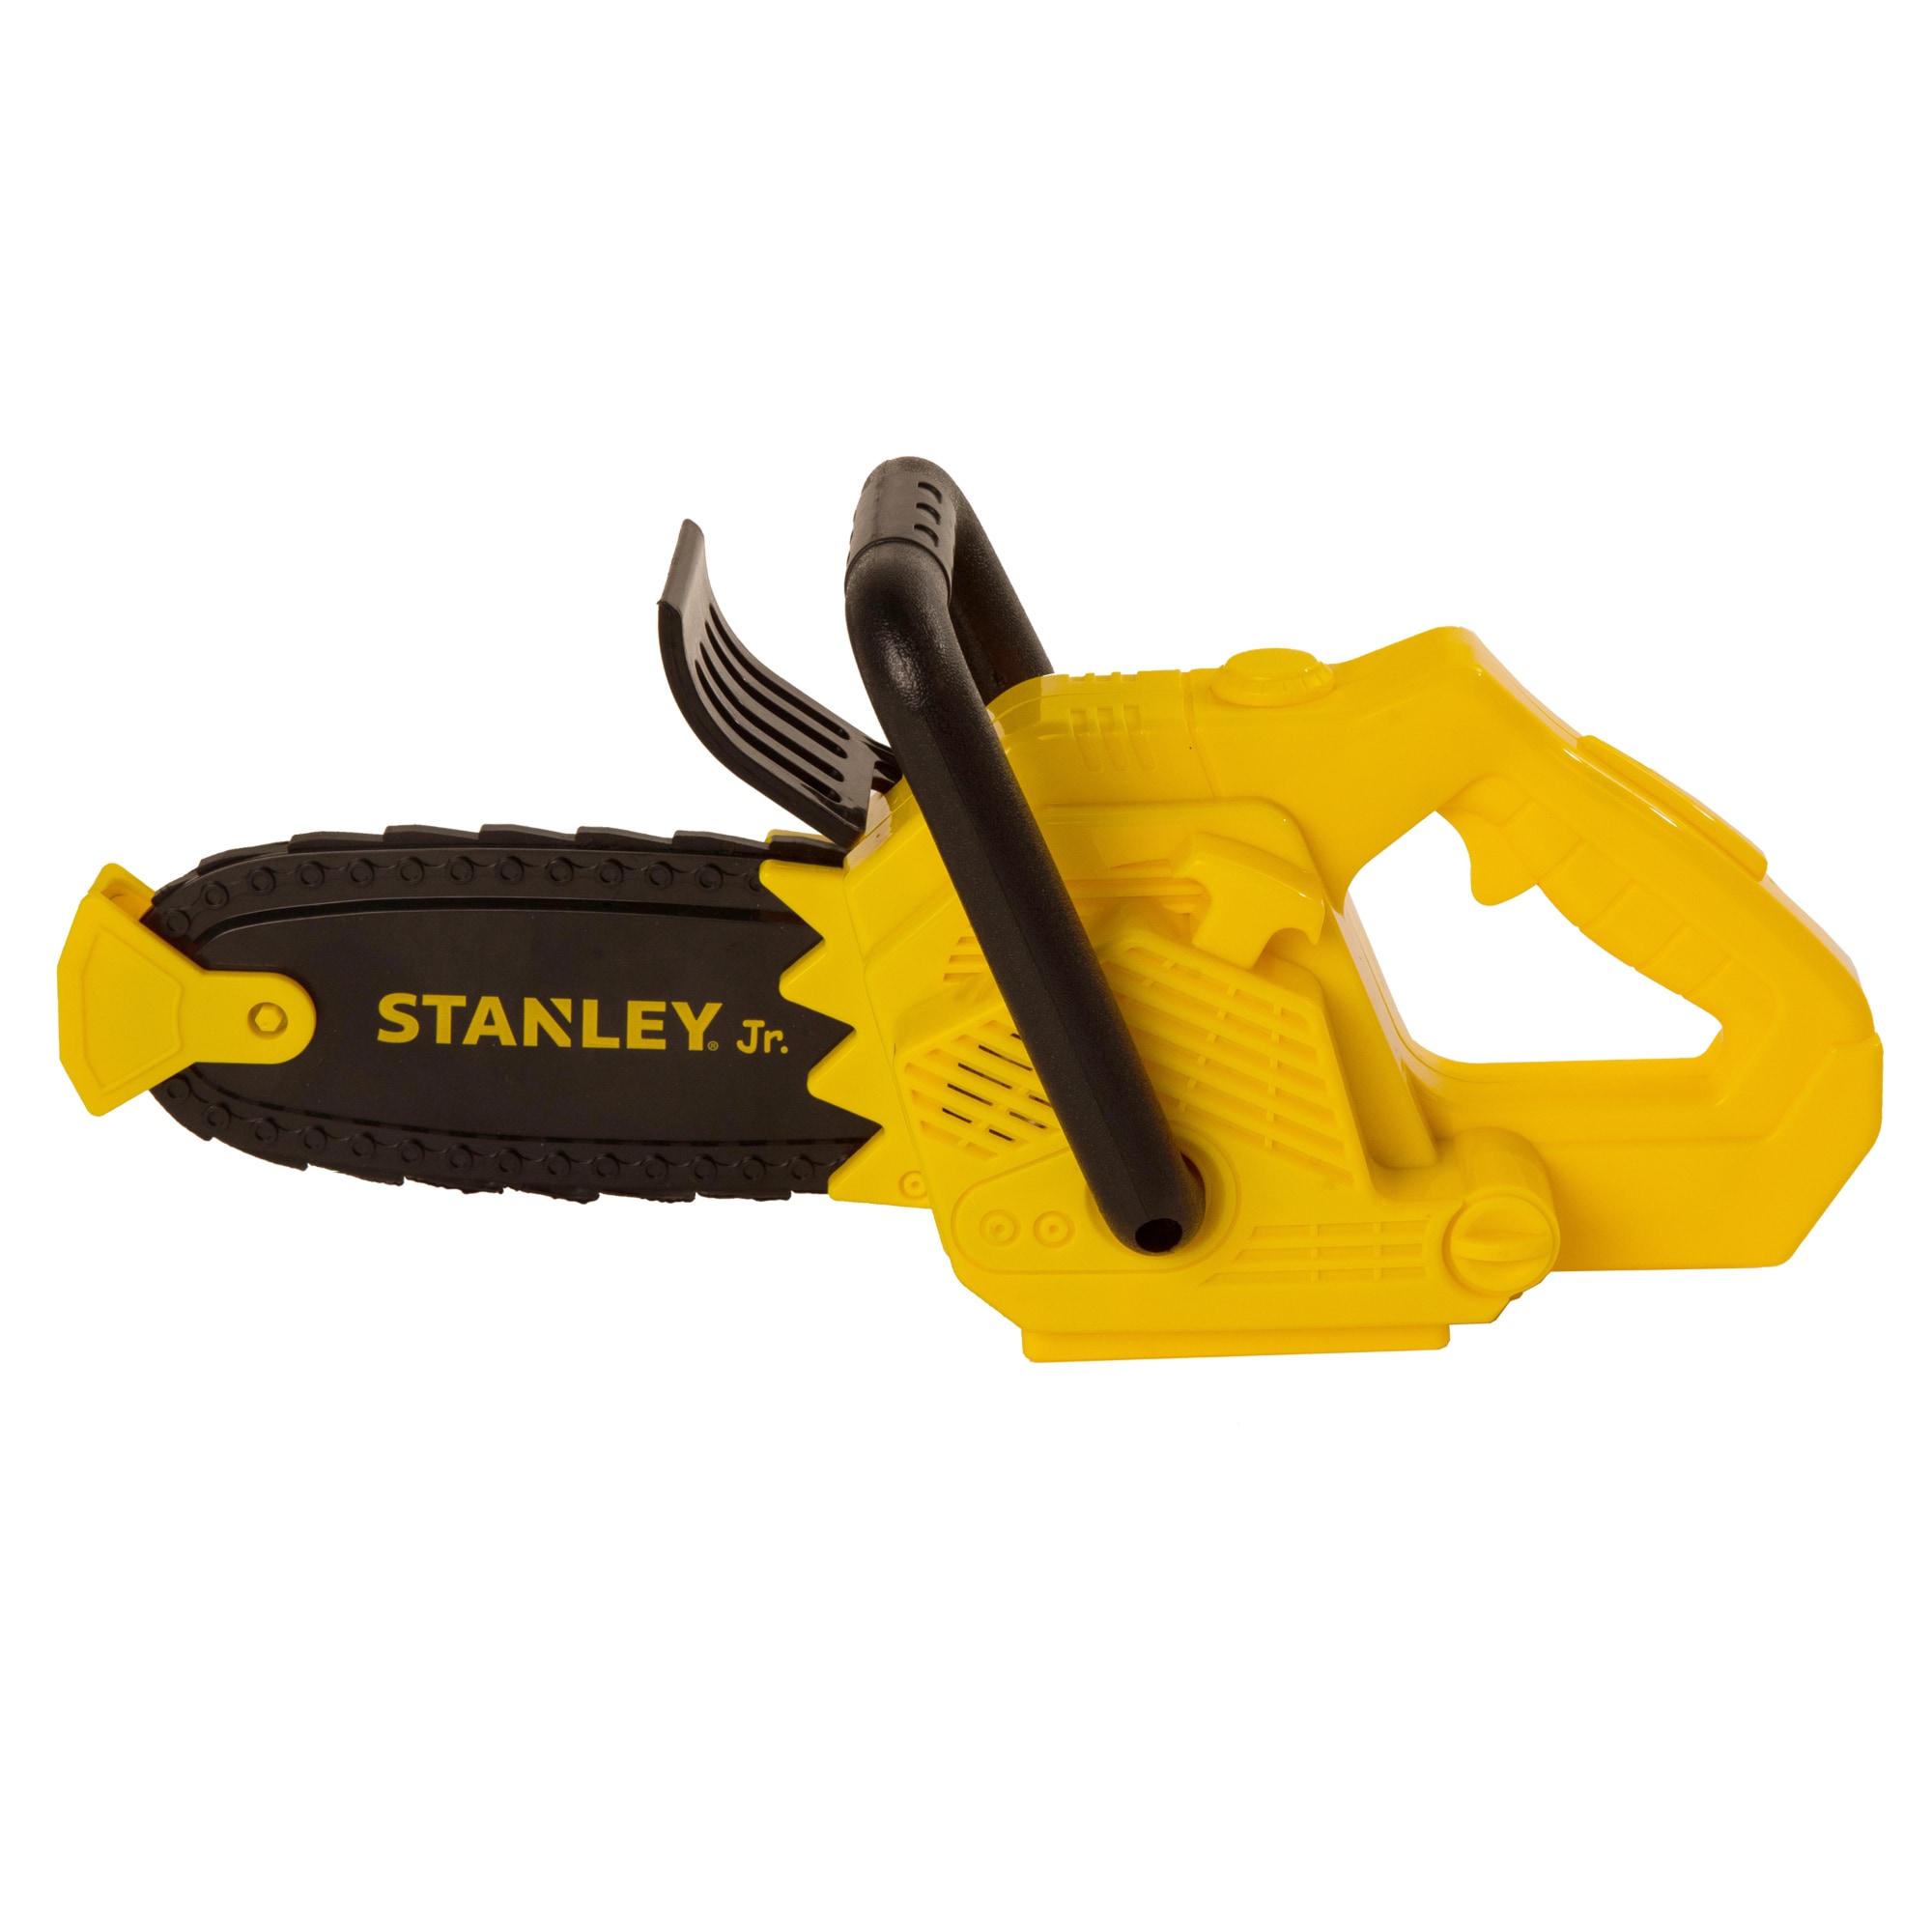 Stanley Jr. Wheelbarrow, Kids Size, Yellow/Black